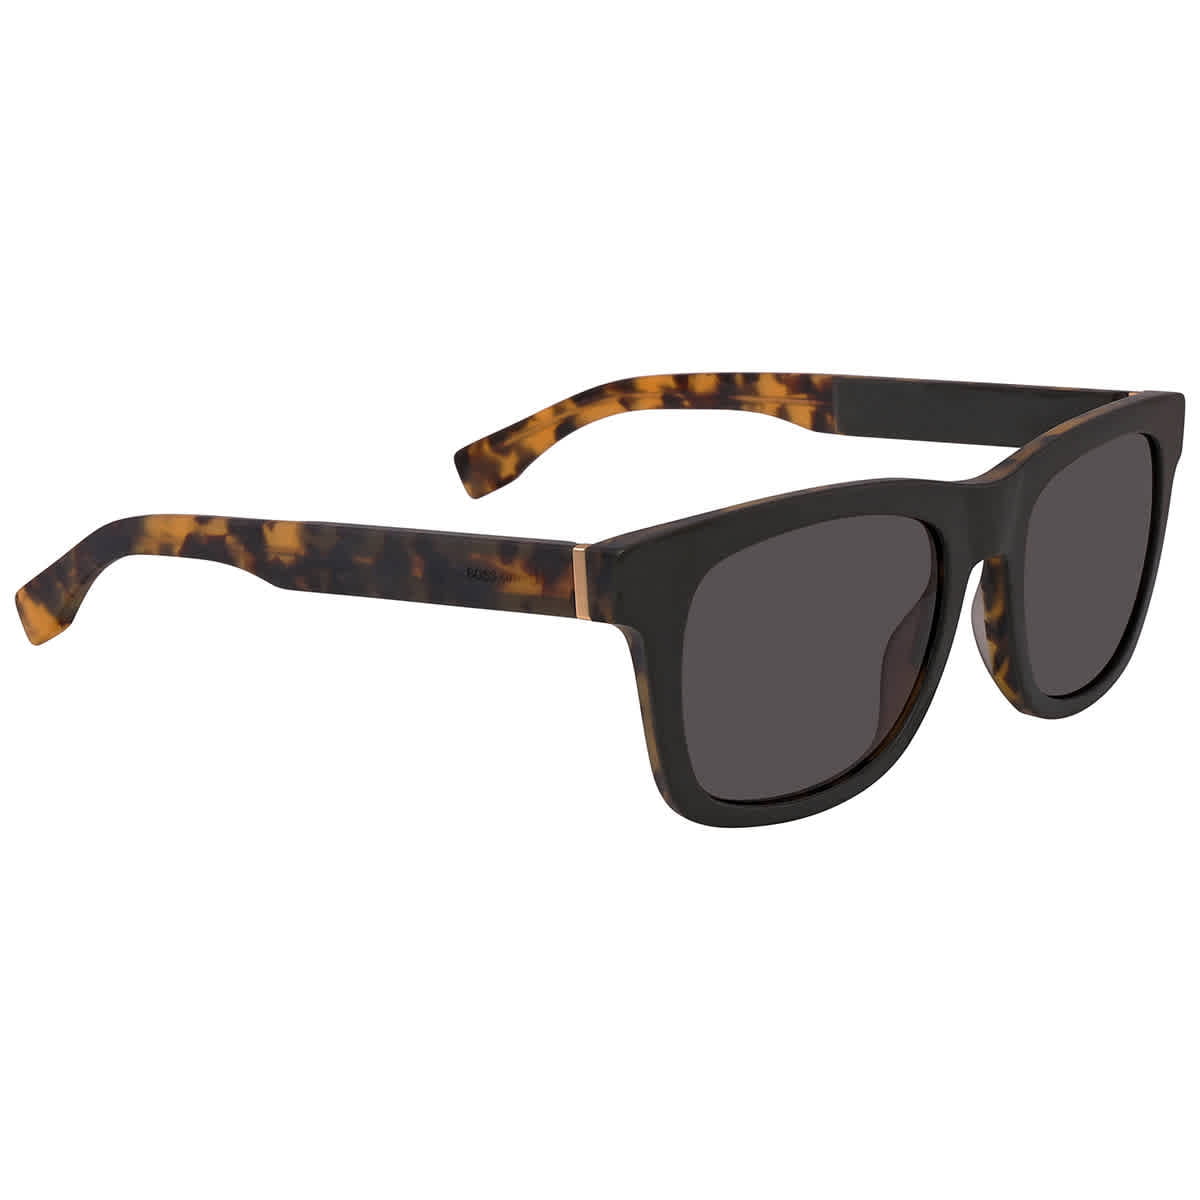 Boss Orange Grey Square Men's Sunglasses BO 2M6/IR 52 20 140 Walmart.com